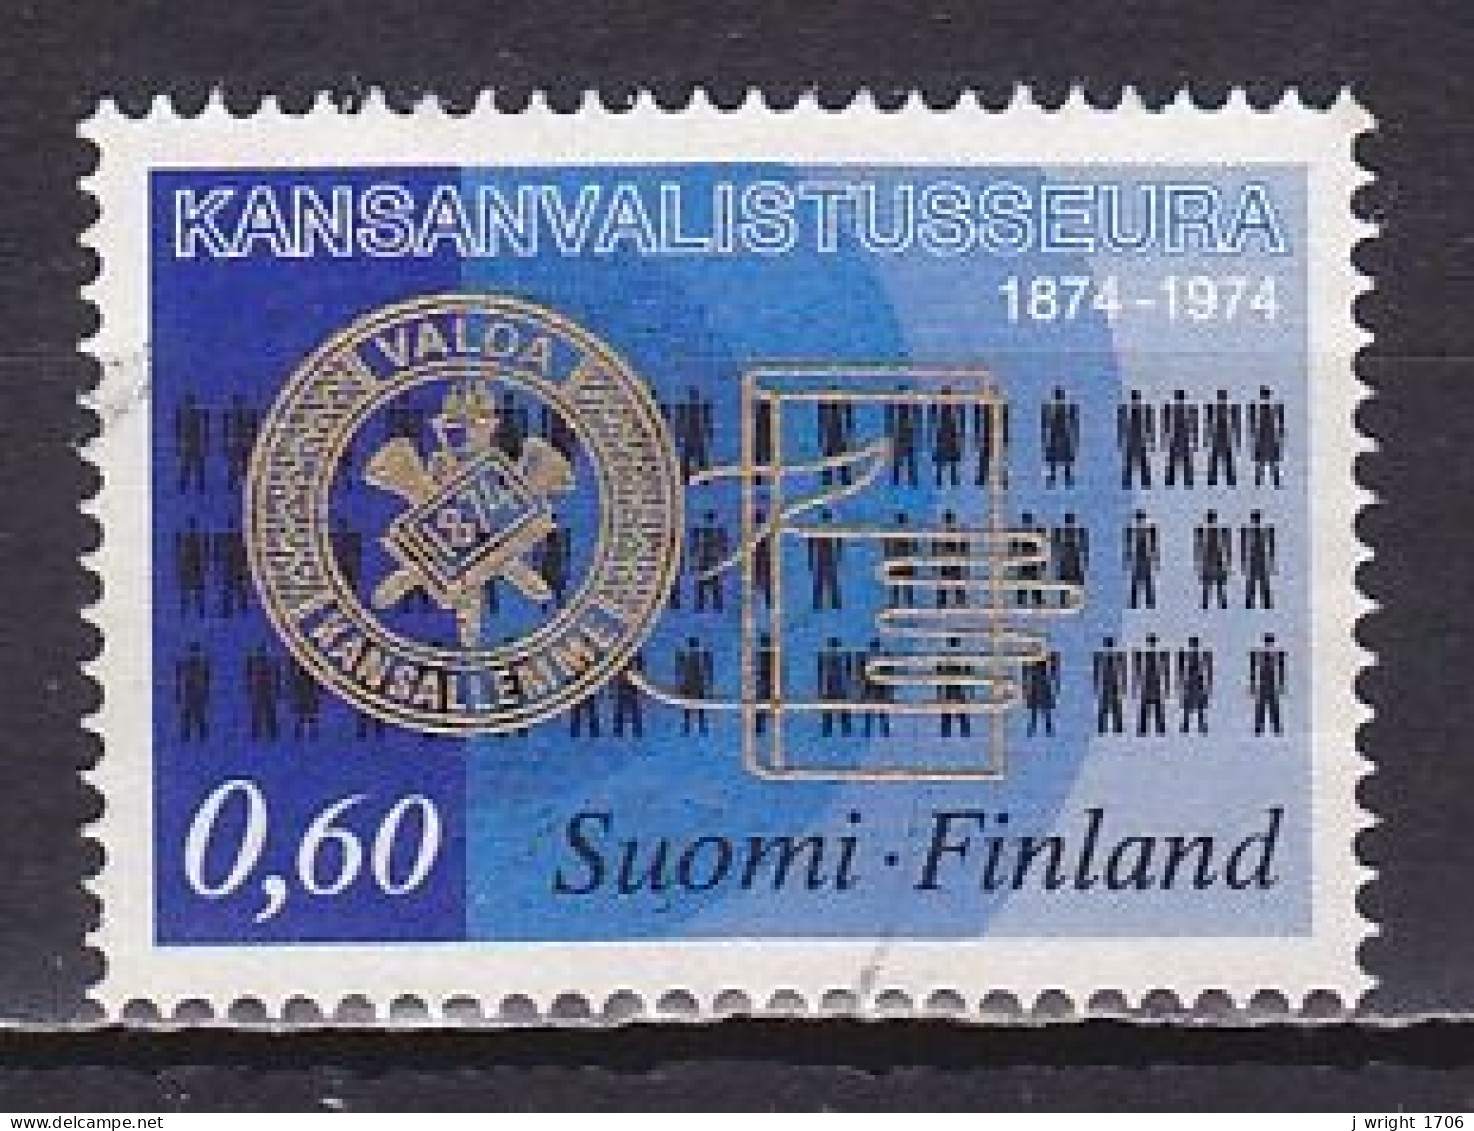 Finland, 1974, Adult Education Centenary, 0.60mk, USED - Oblitérés